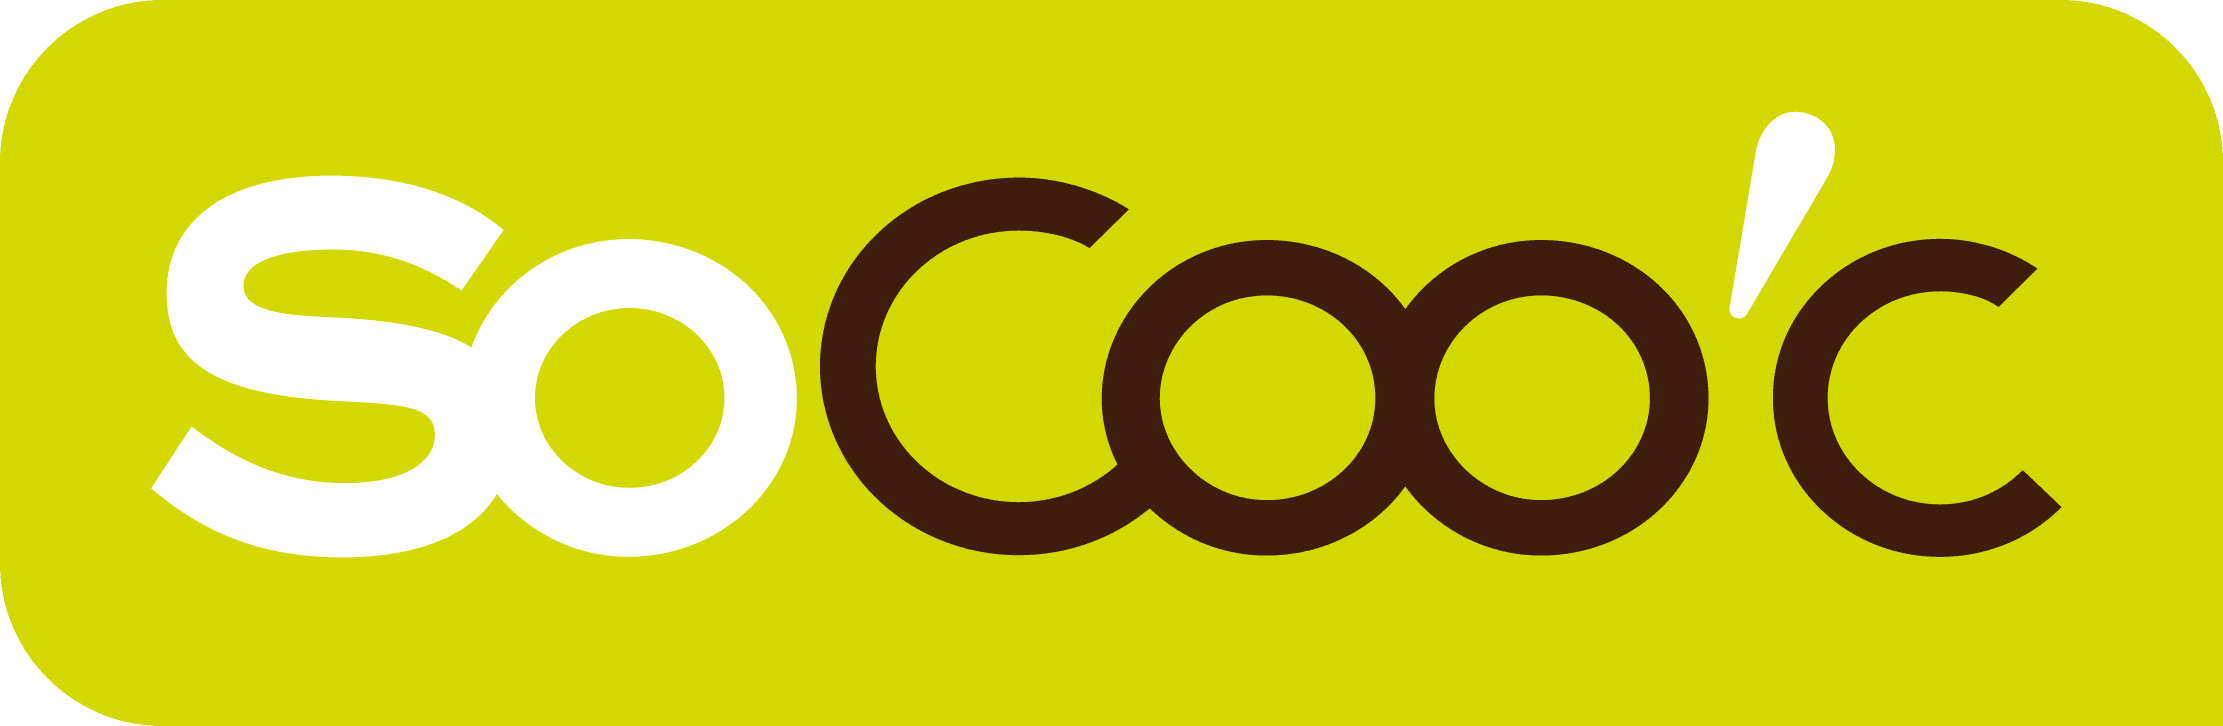 Logo_SoCooc_seul_Definitif_04-04_SFG_2017_10.png